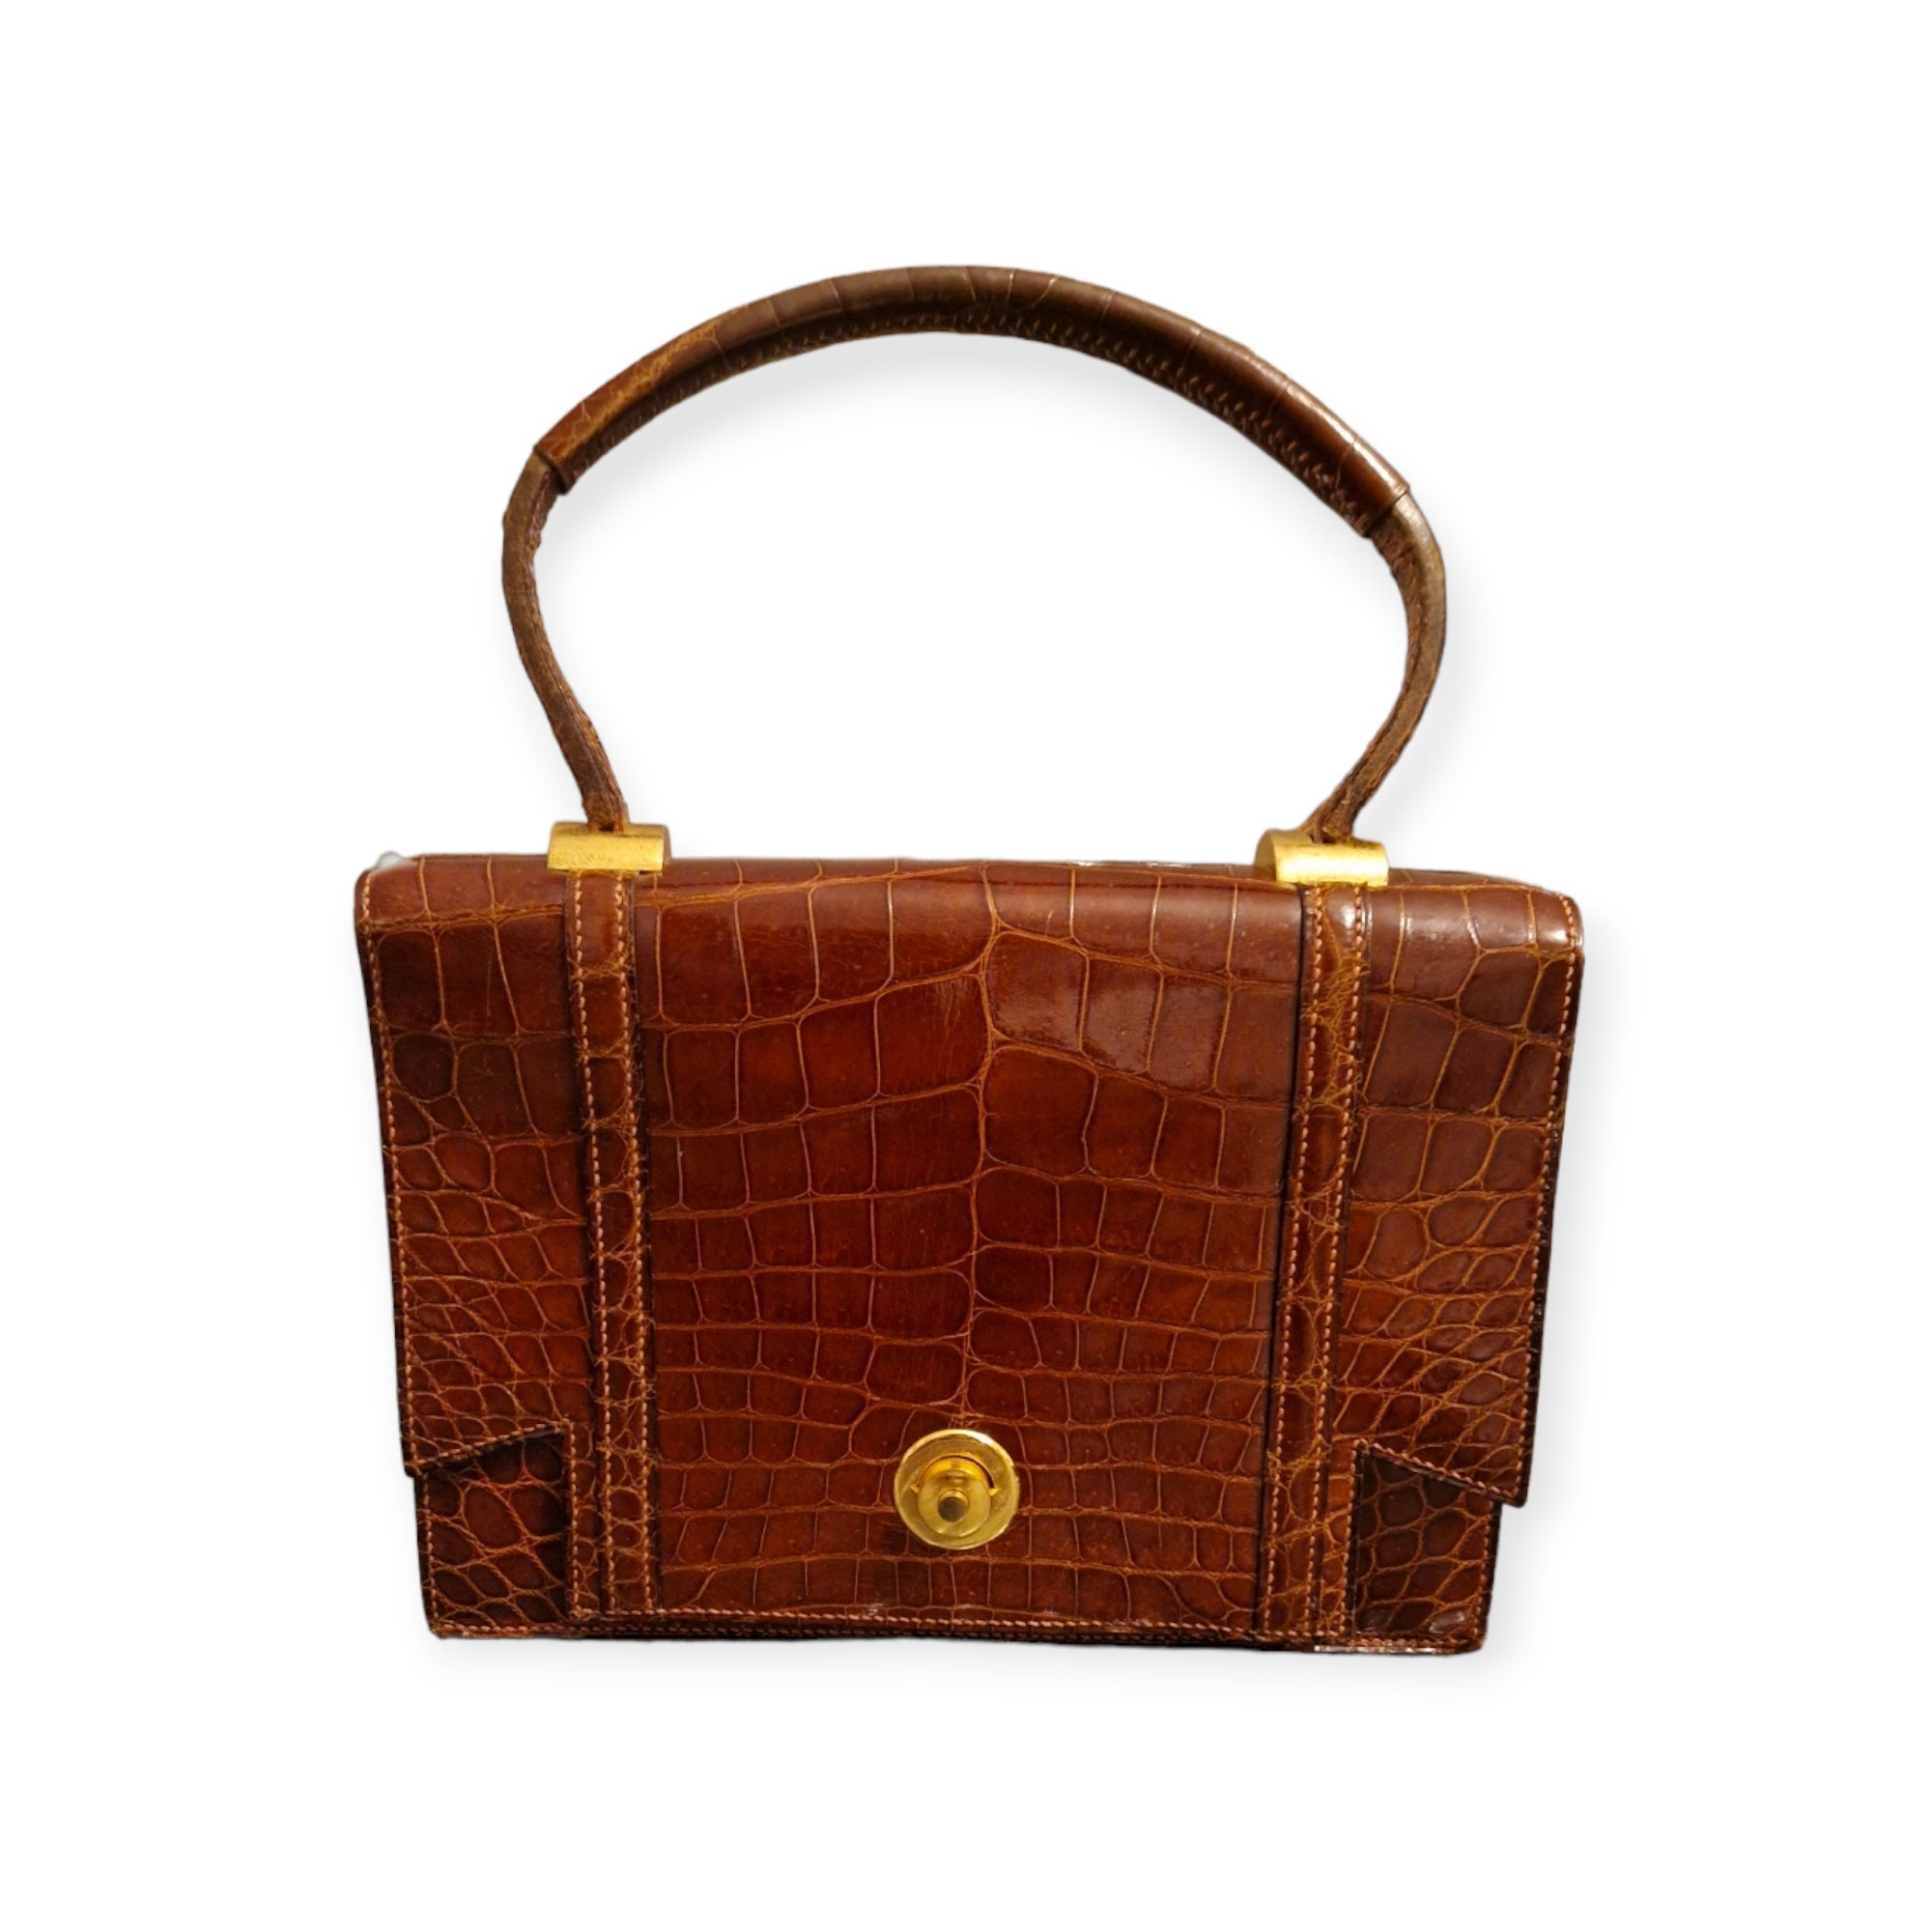 Light TAN Crocodile Belly Skin BIRKIN Bag SATCHEL Bag - HERMES Style -  ITALY - Vintage Skins